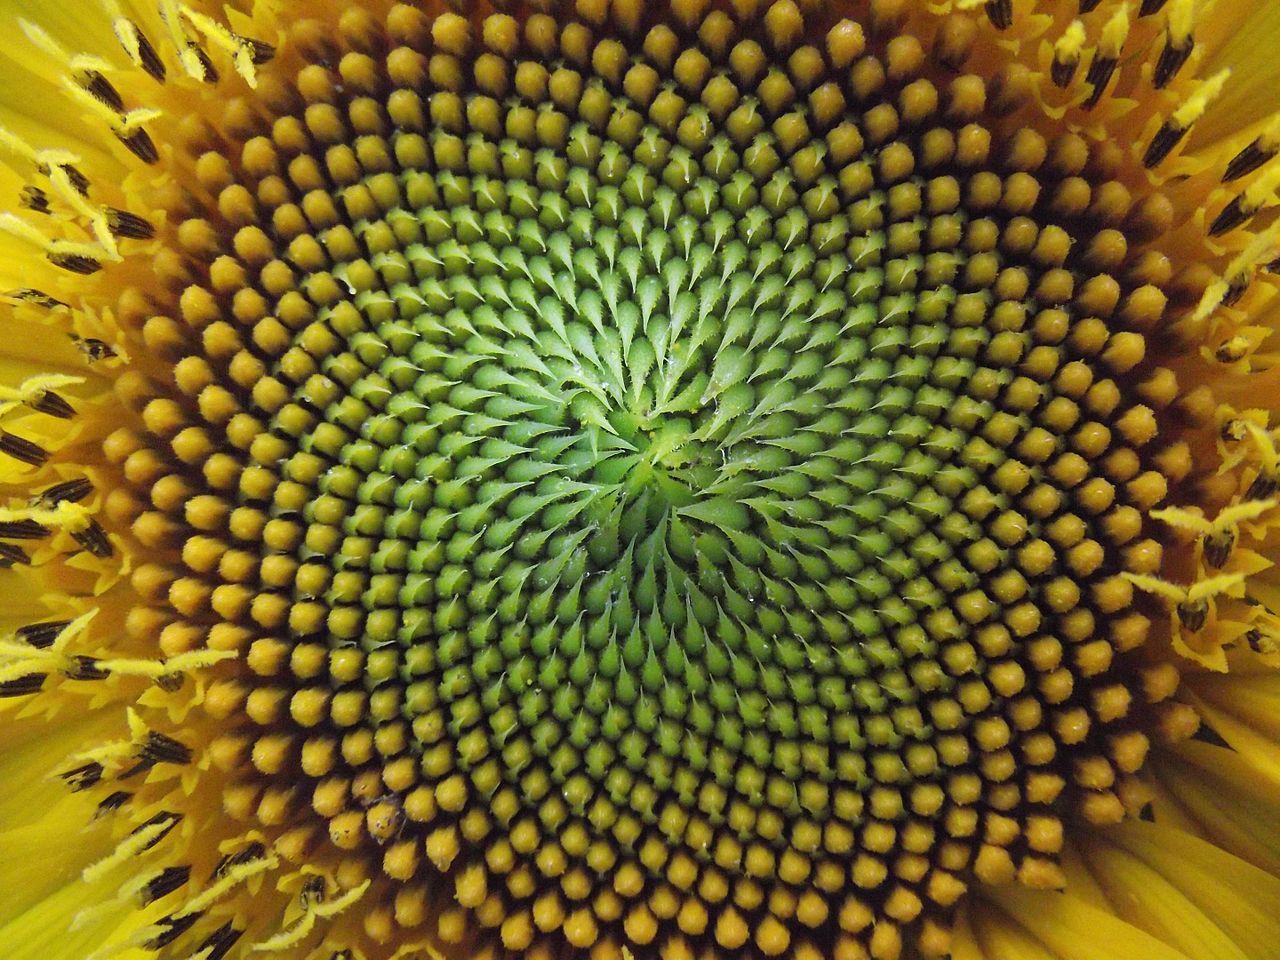 A sunflower demonstrating the Fibonacci Spiral